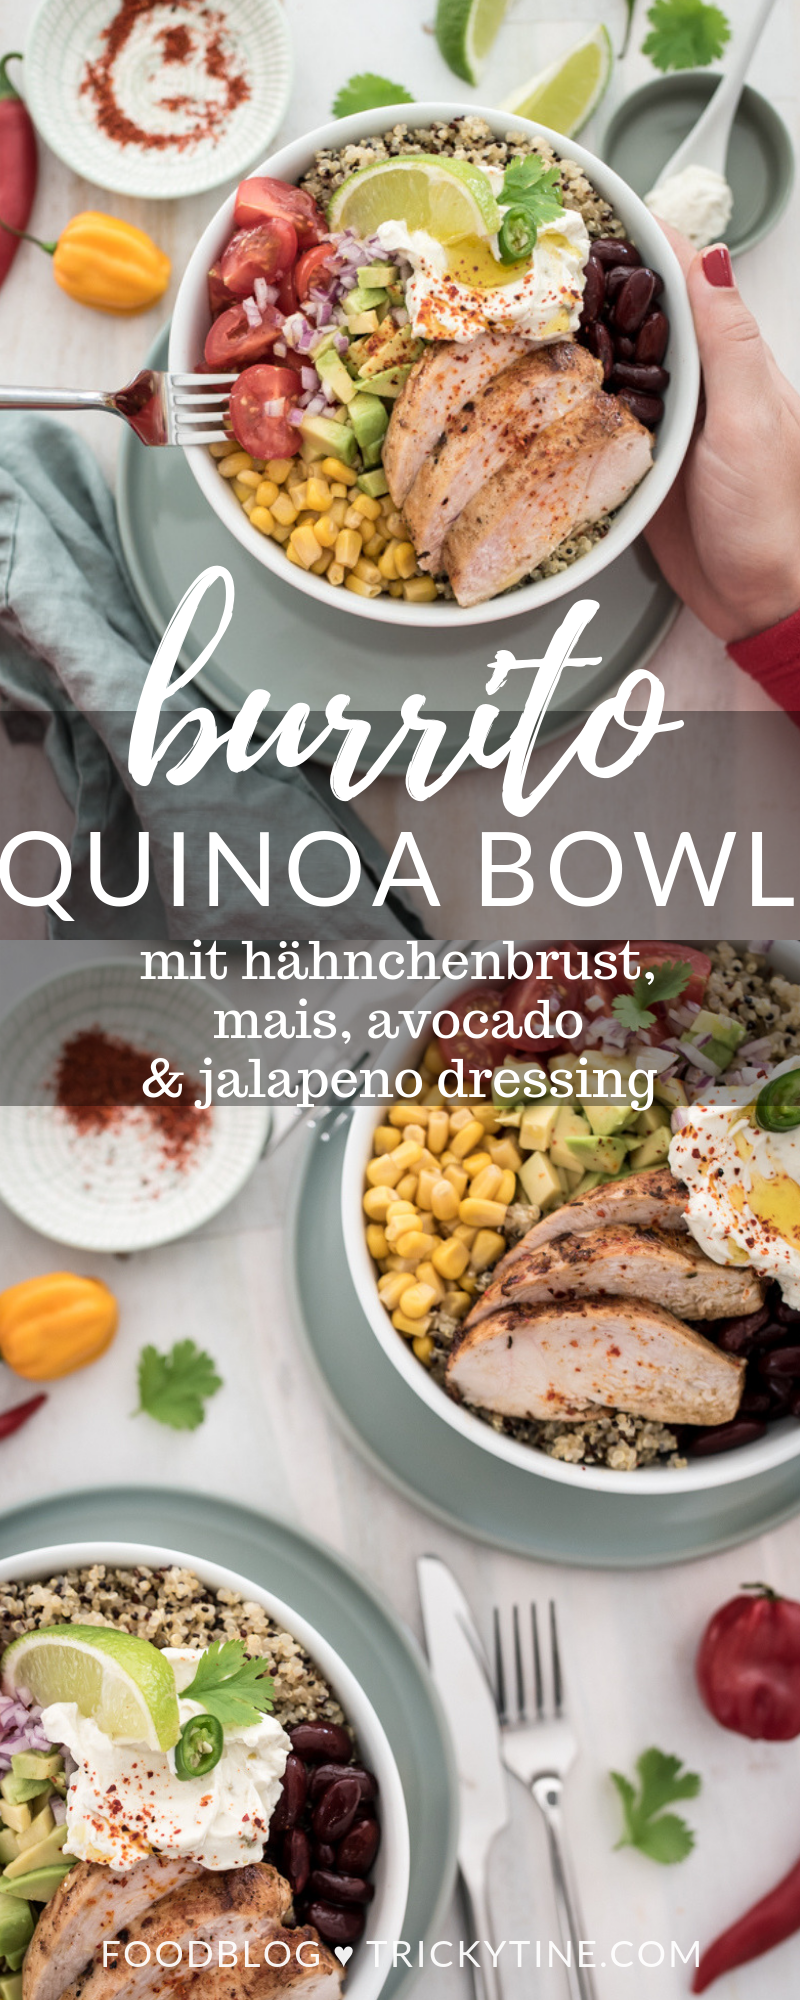 Chicken Burrito Bowl Quinoa trickytine